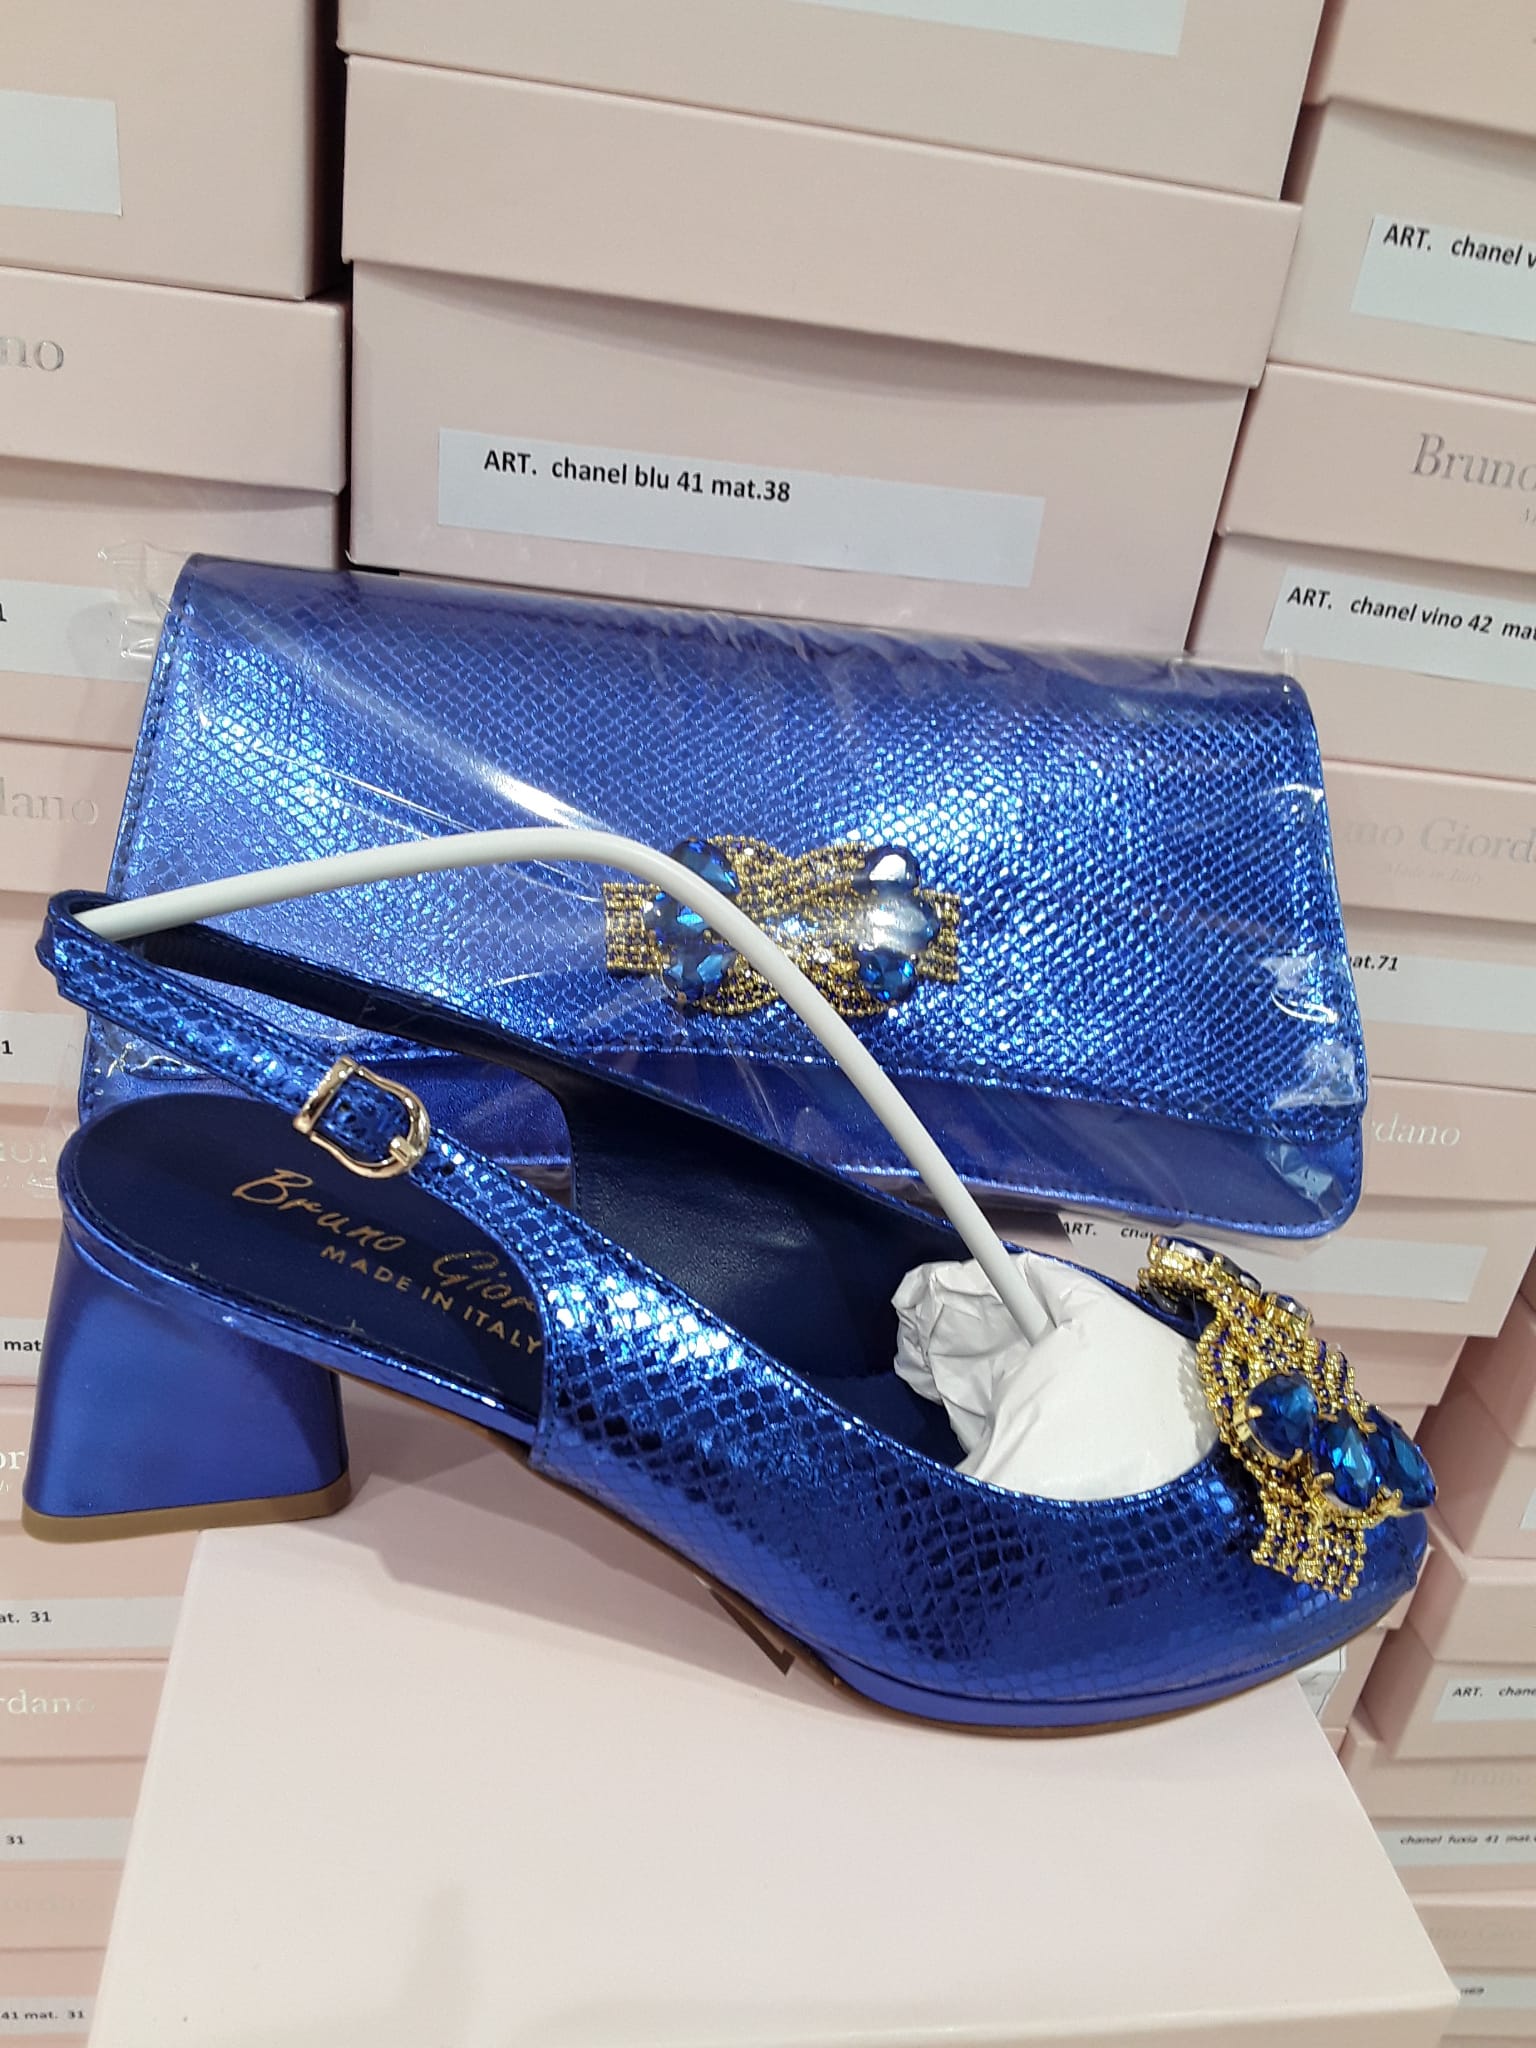 Bruno Italian shoe and bags - Godshandfashion - Royal blue EUR 40/US 10